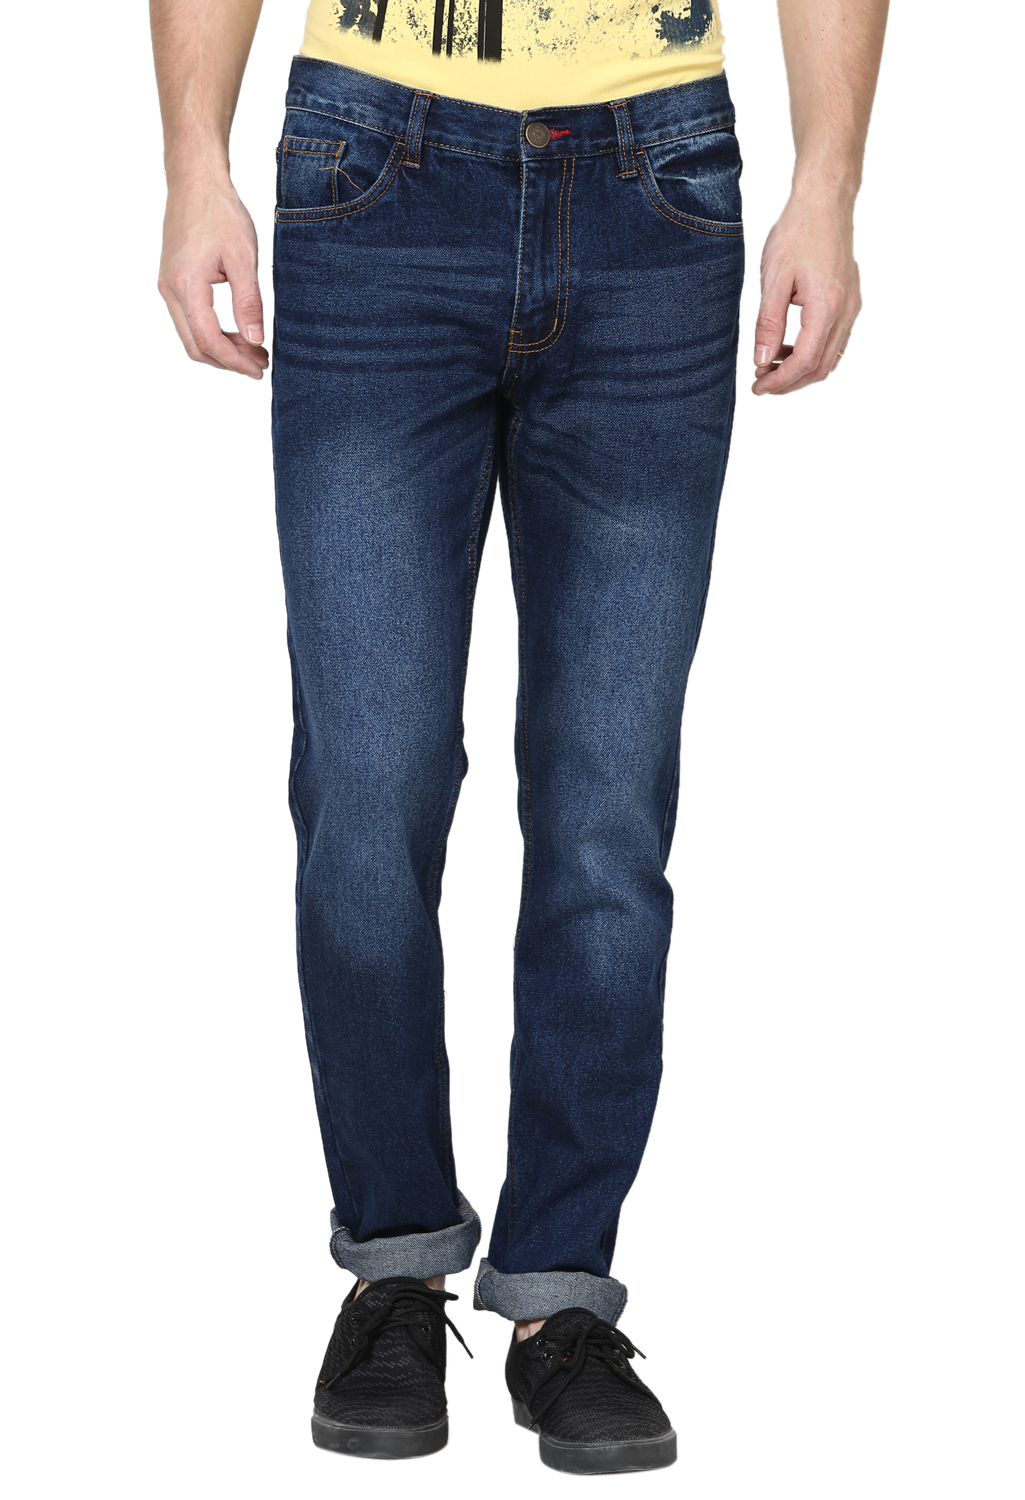 Buy Newport Men's Blue Regular Fit Jeans Online @ ₹999 from ShopClues